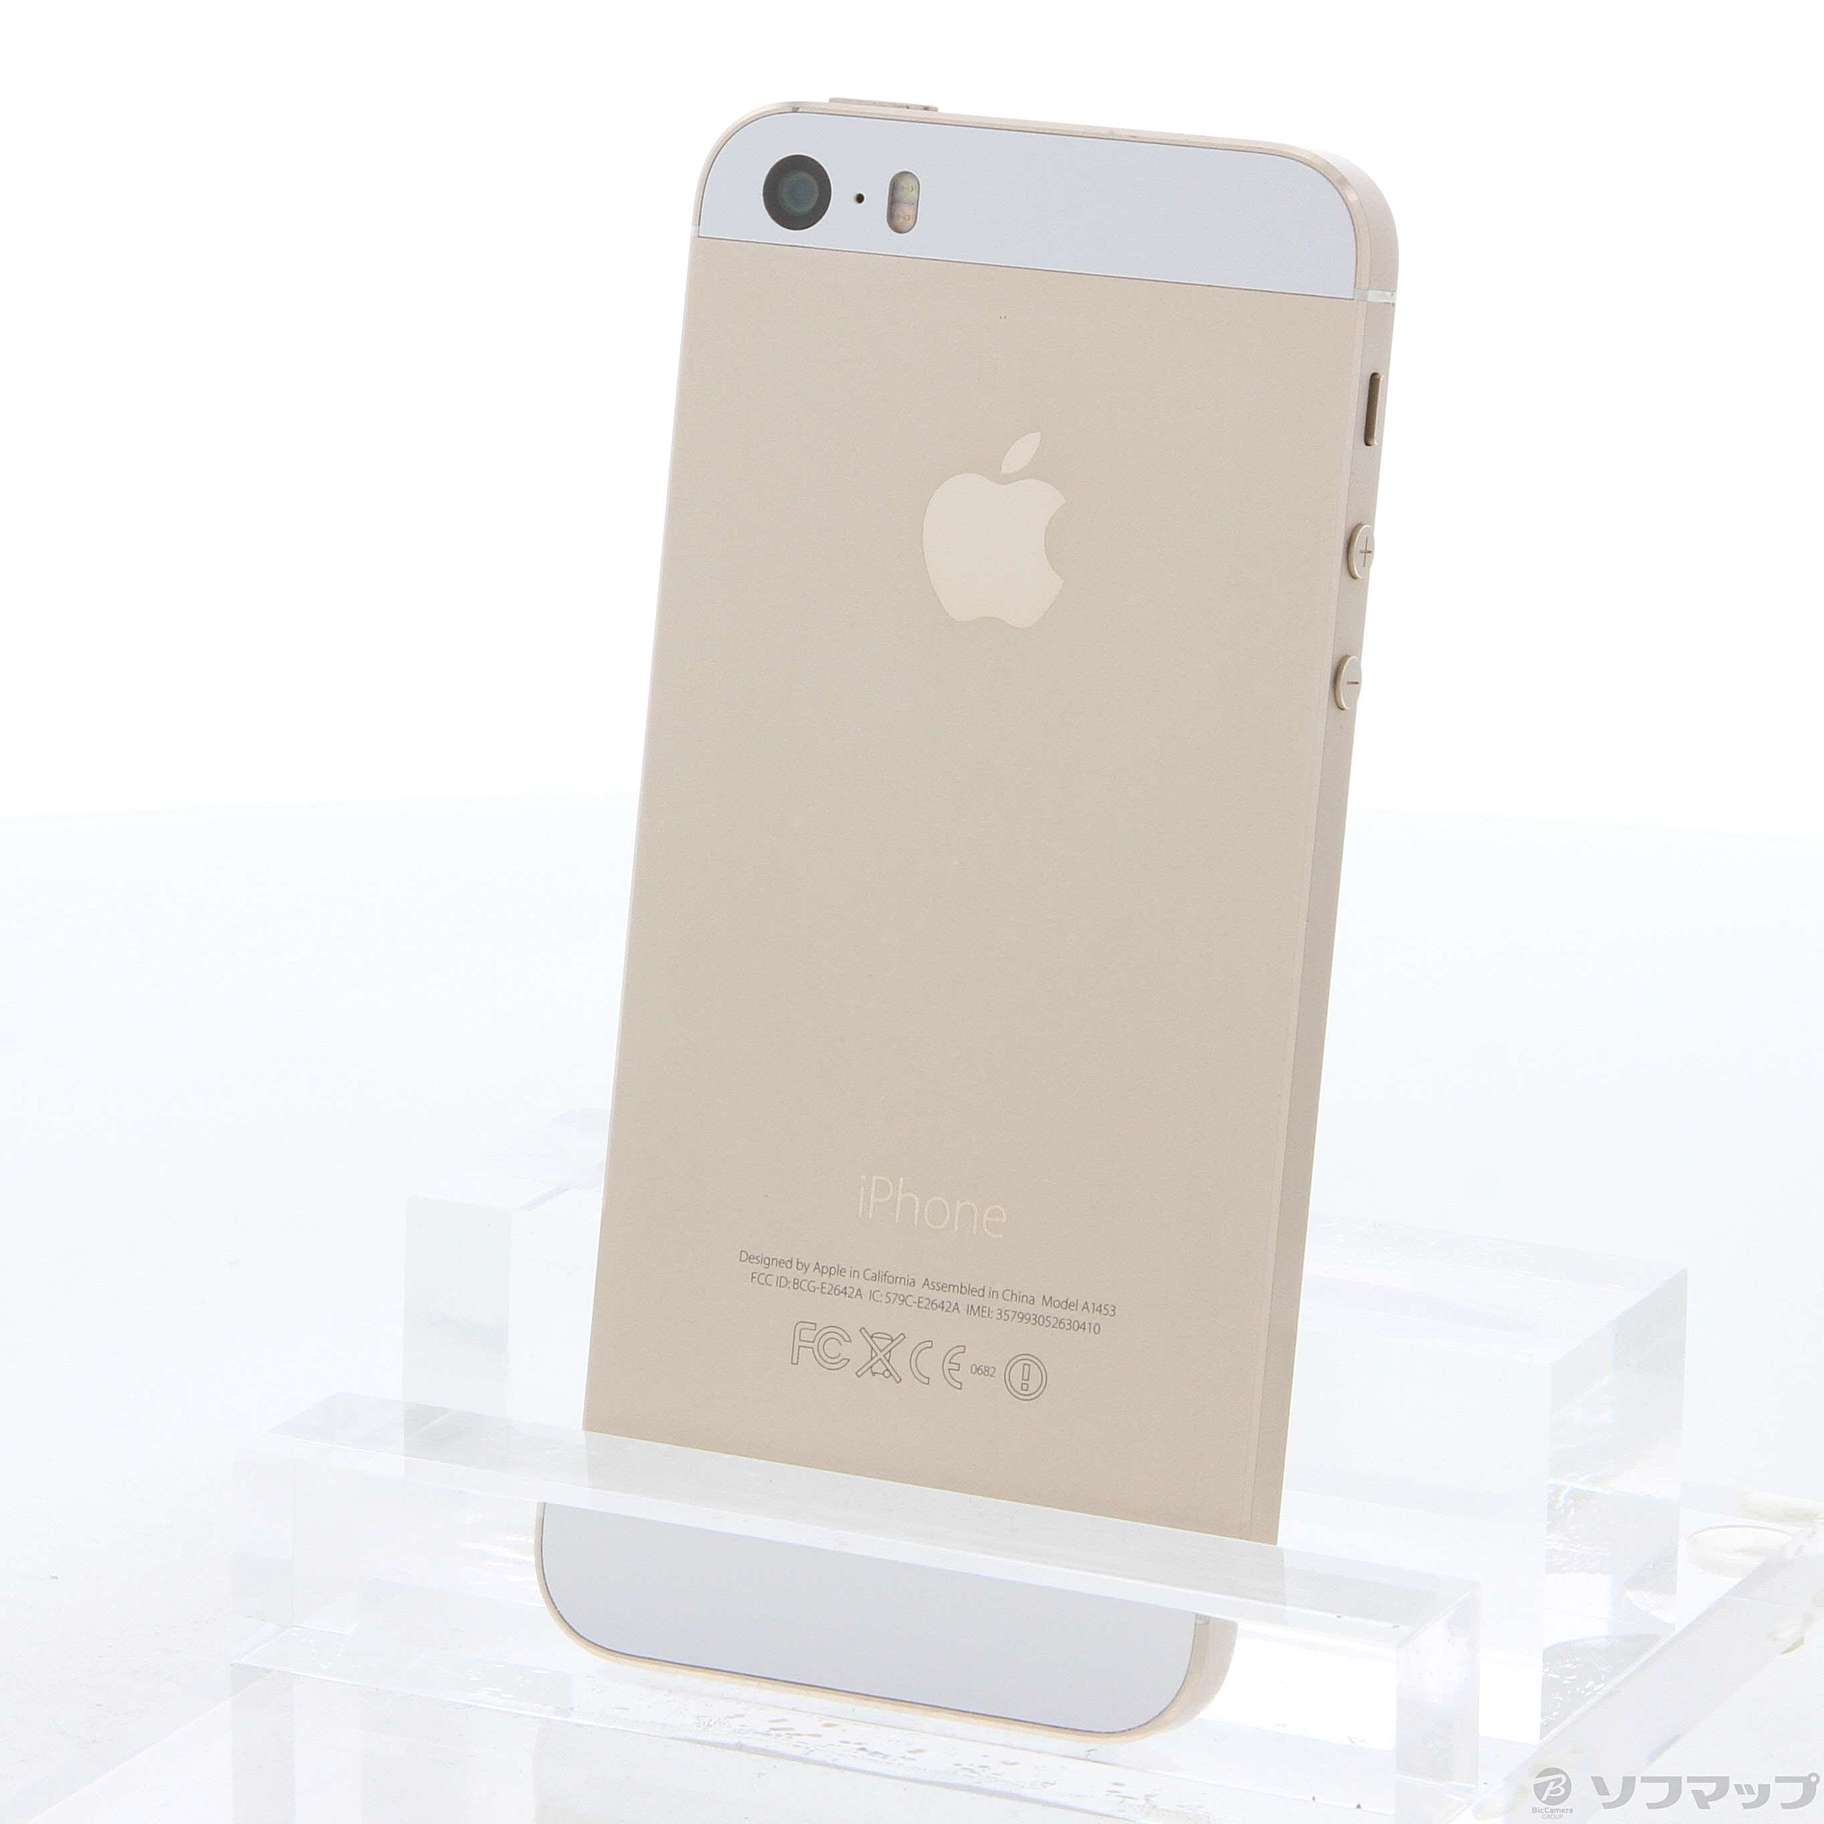 iPhone5s GOLD 64GB docomo